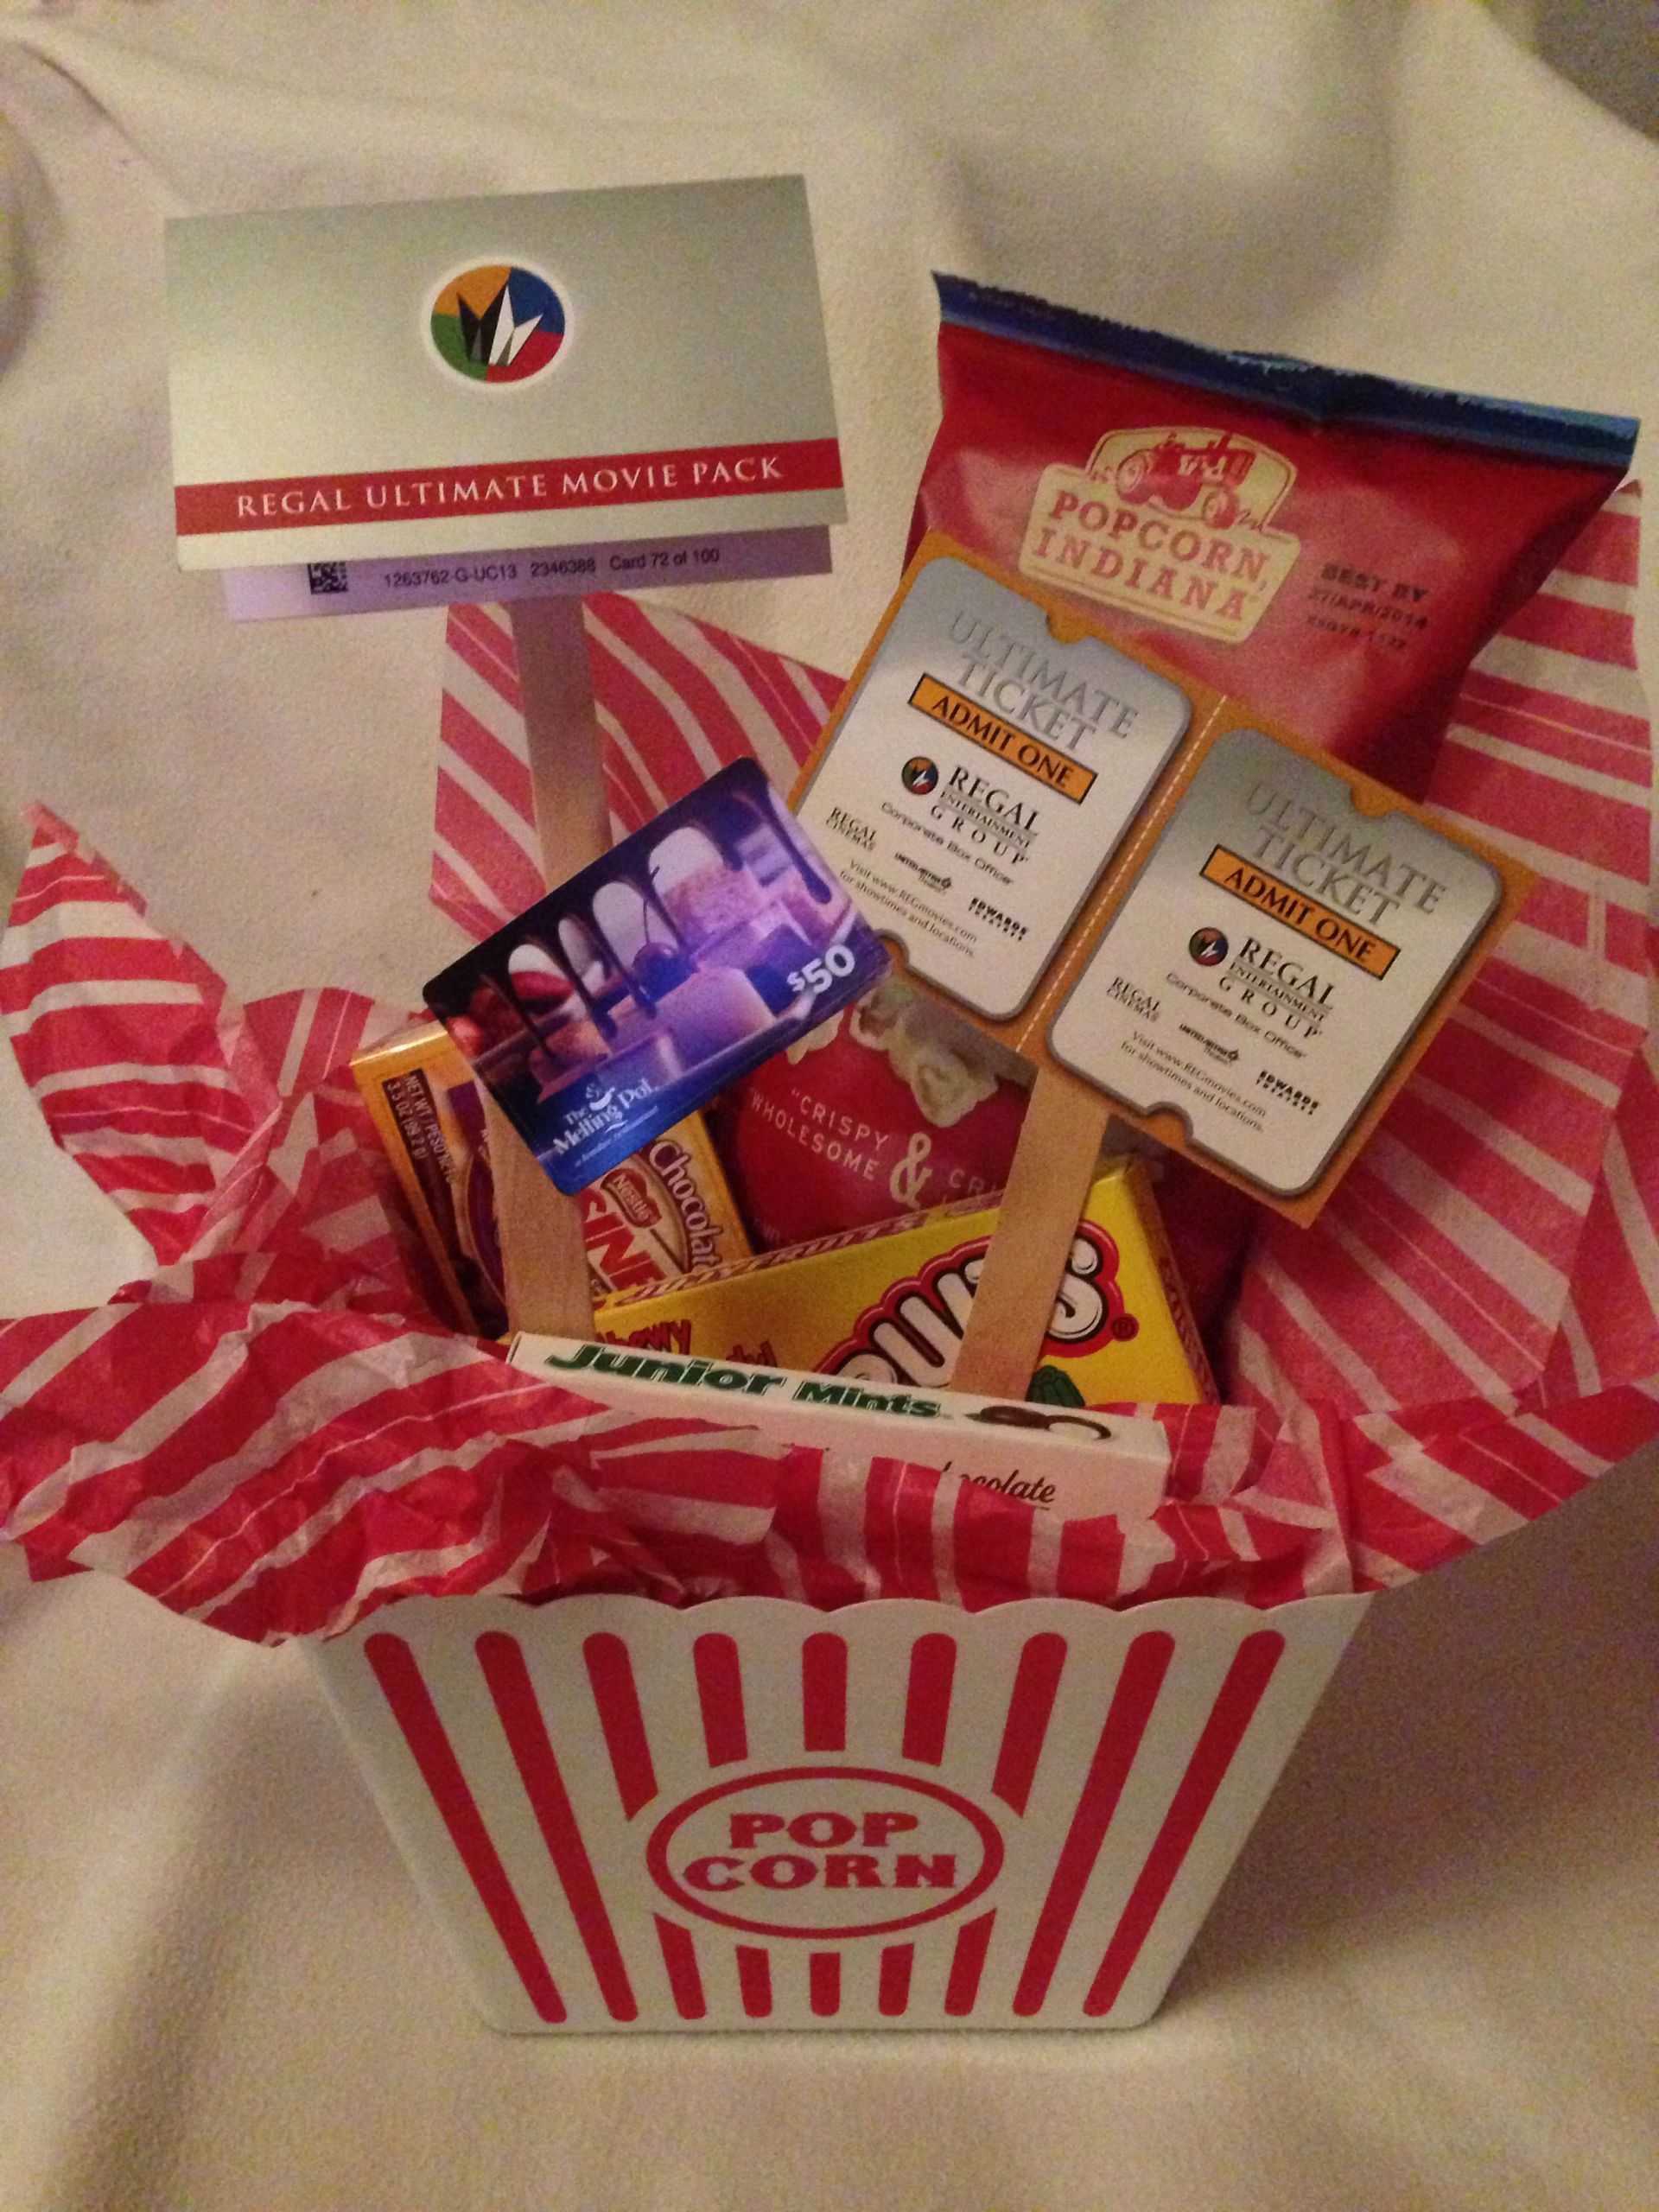 Movie Ticket Gift Basket Ideas
 Dinner & a movie Gift Movie theater snacks bag of